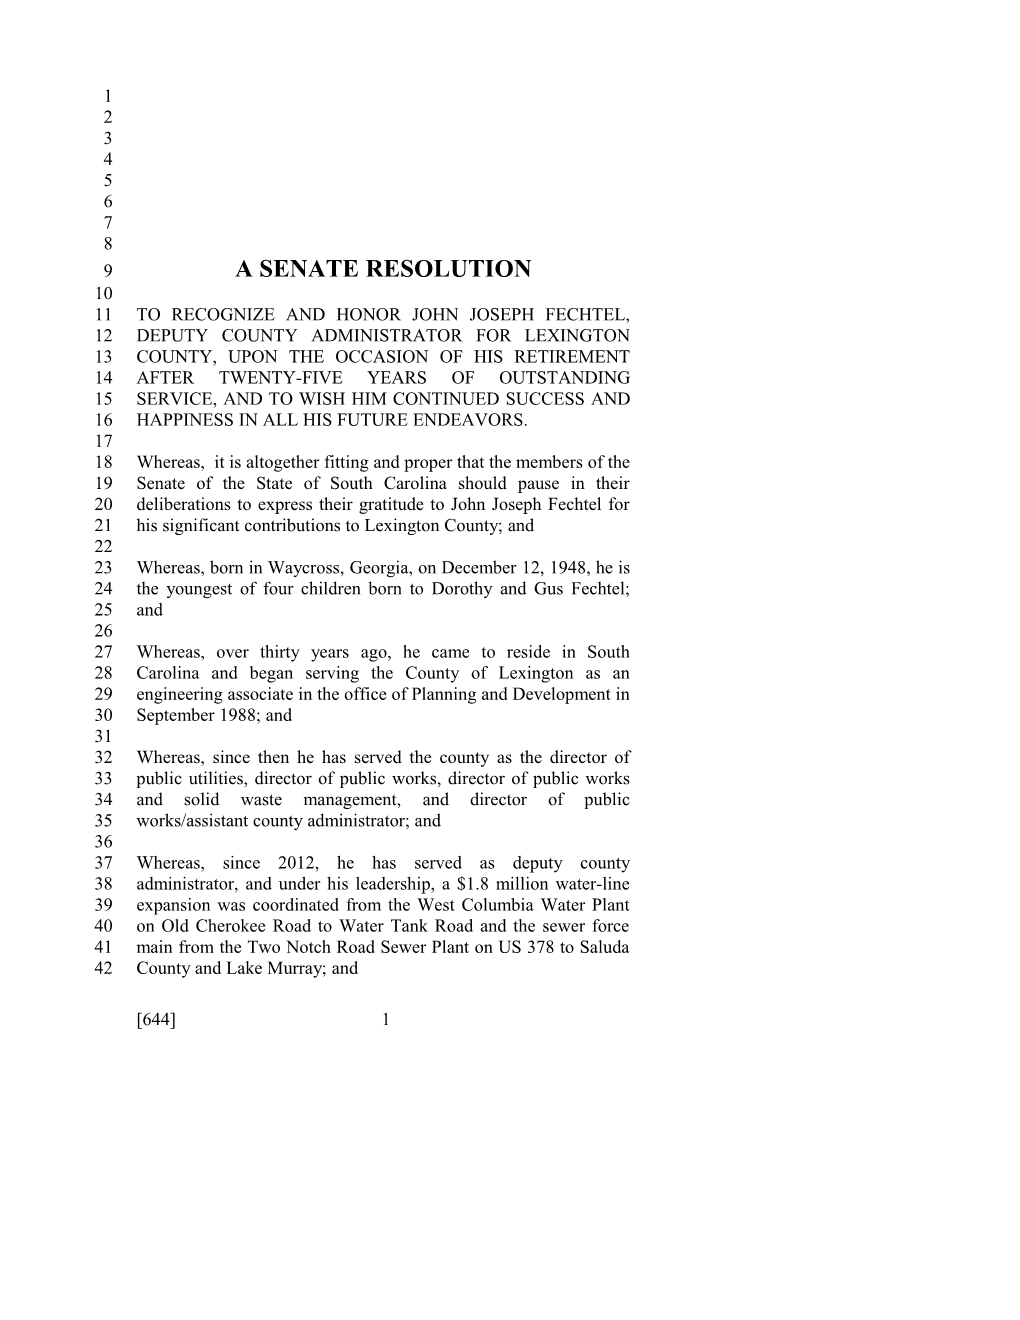 A Senate Resolution s11